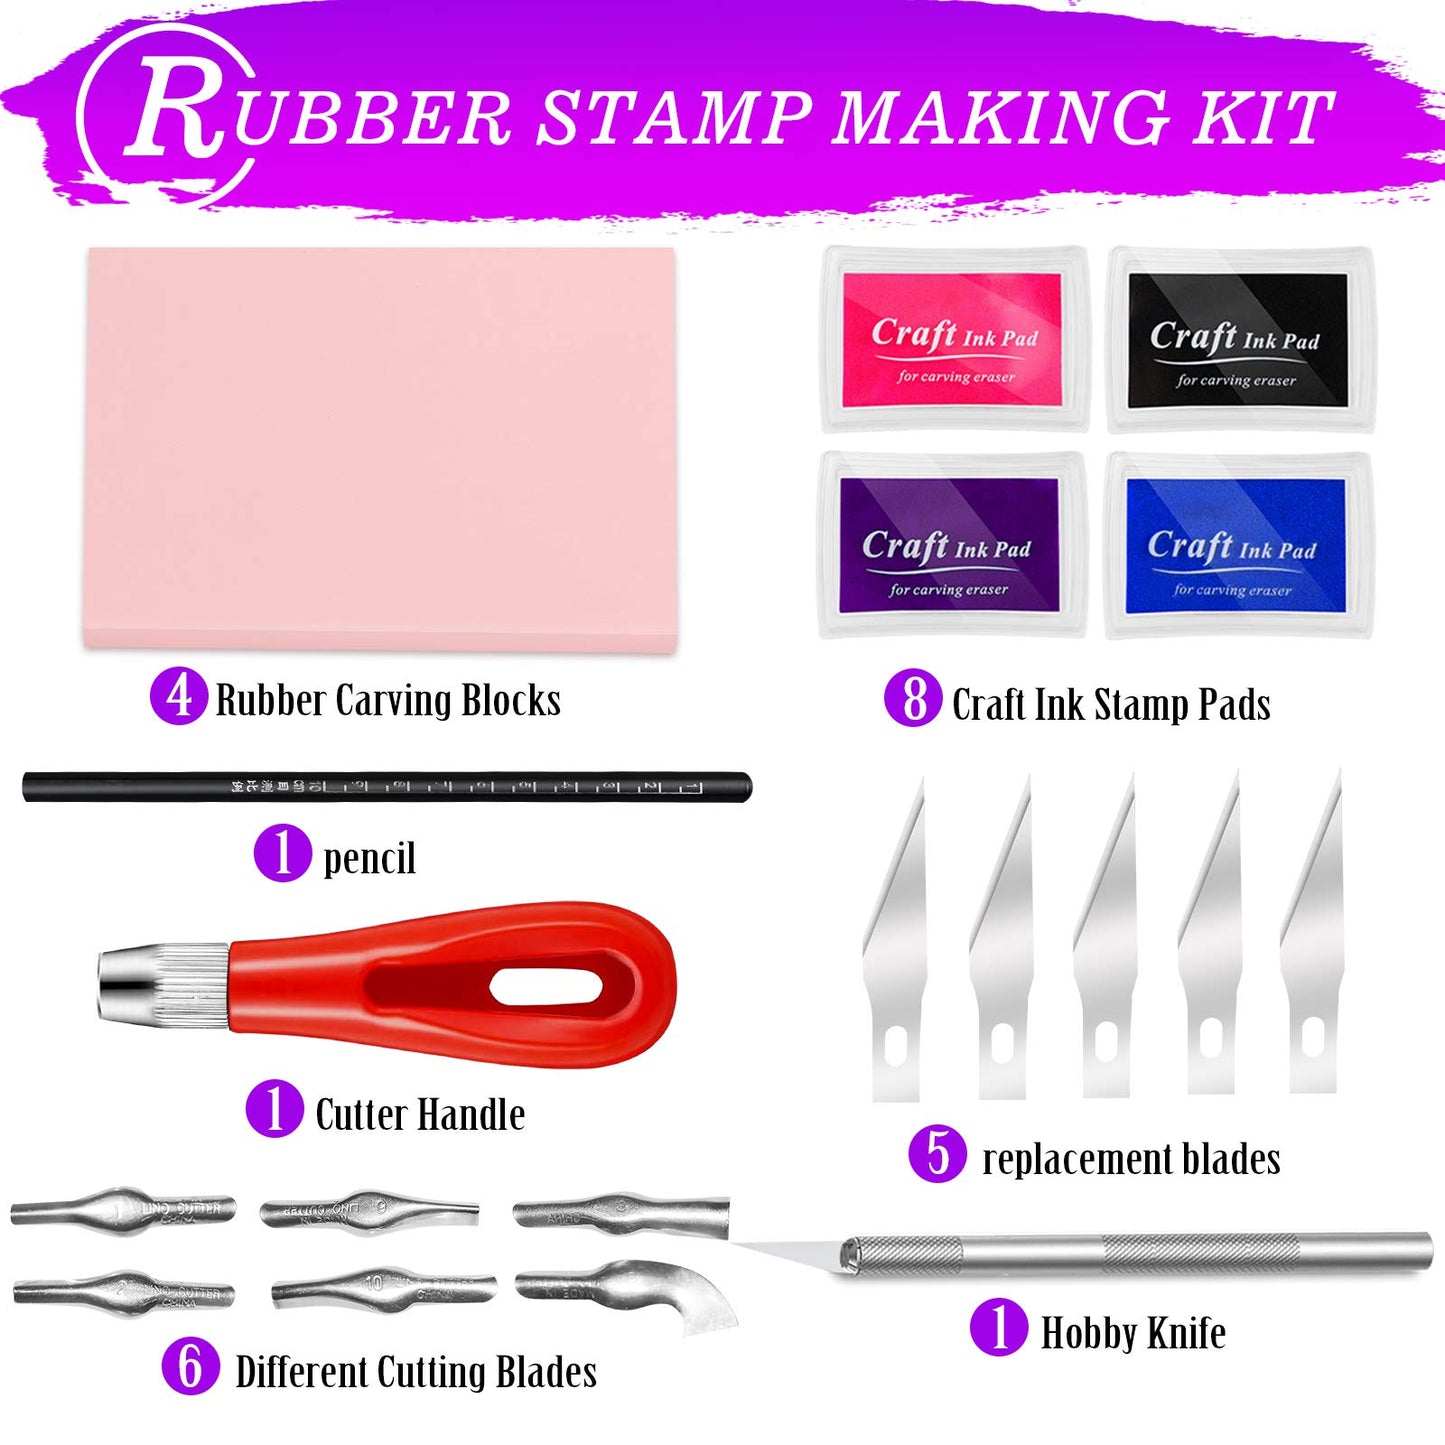 WAYCOM 18 Pcs Rubber Stamp Making Kit,Rubber Carving Block Linoleum Cutter Set Rubber Stamp Carving Block Craft Ink Pad Hobby Knife Pencil for DIY